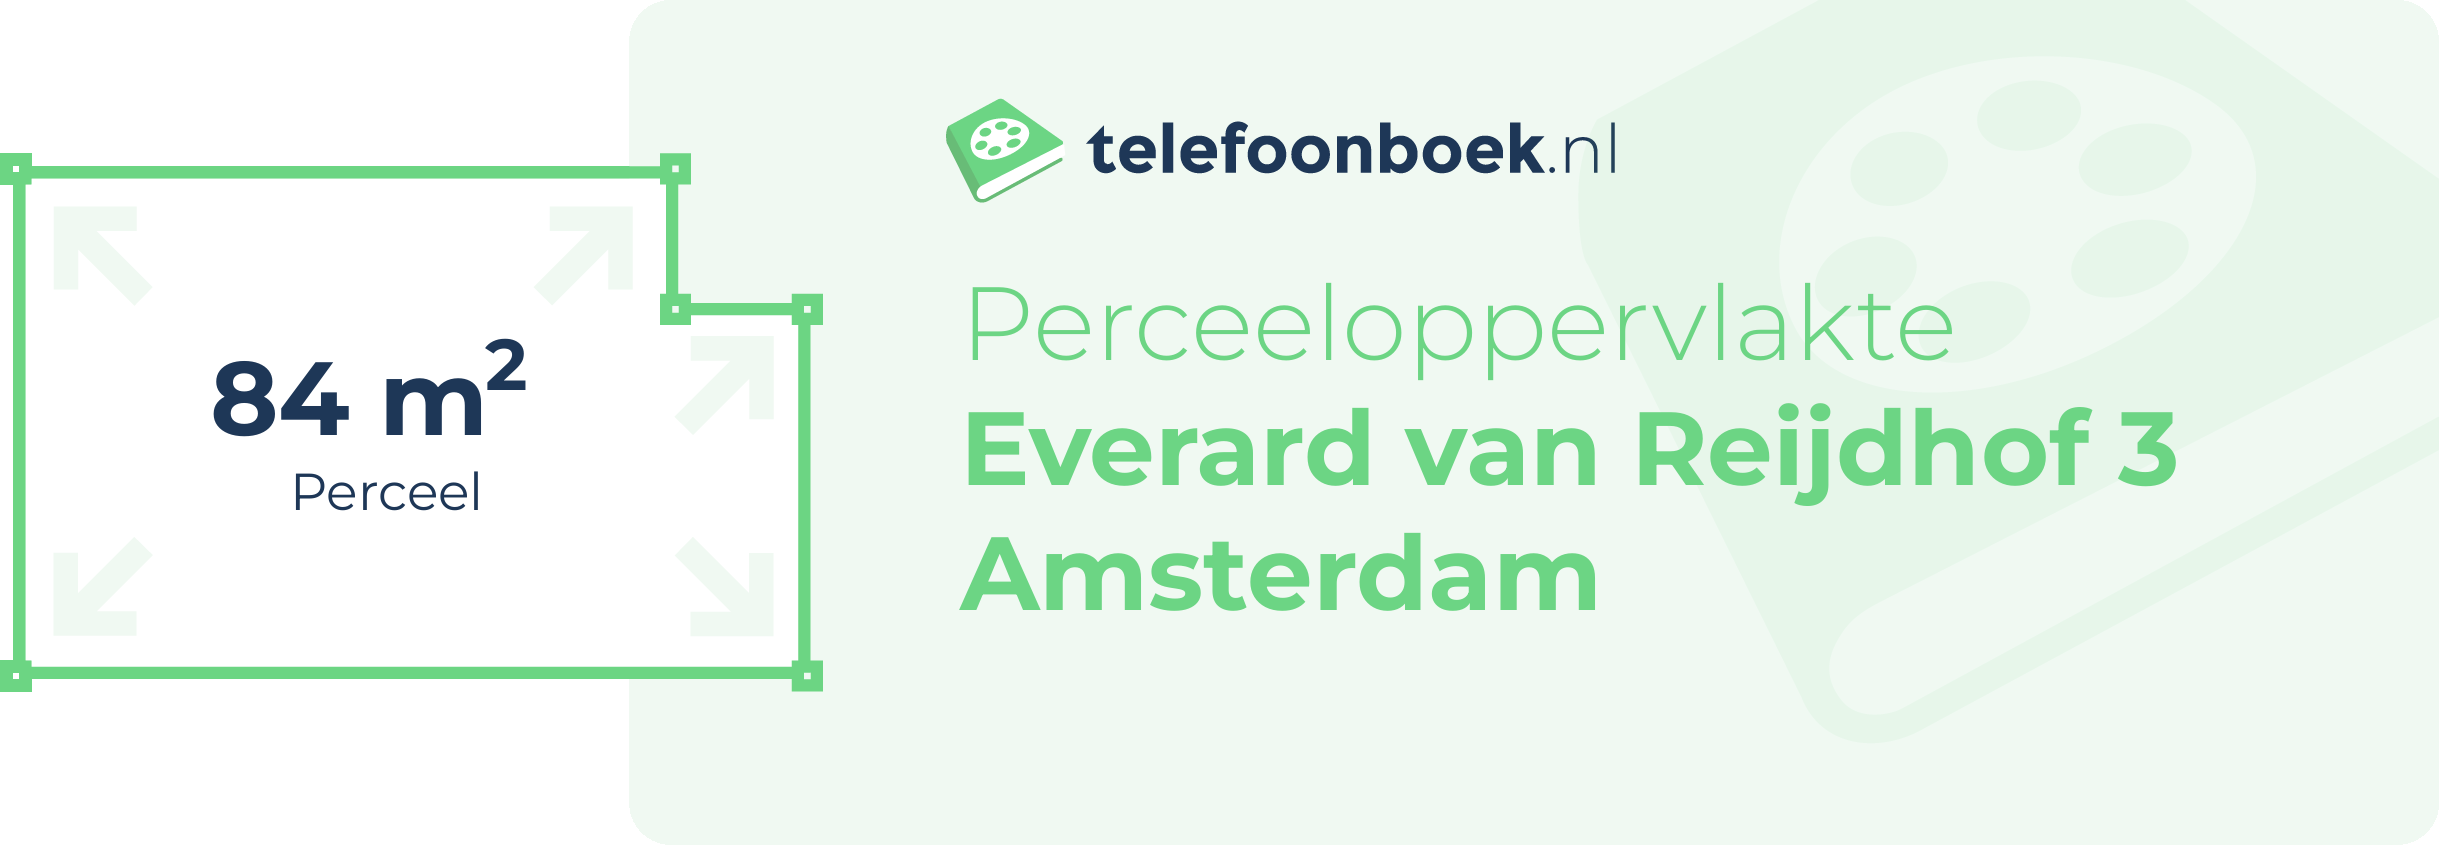 Perceeloppervlakte Everard Van Reijdhof 3 Amsterdam